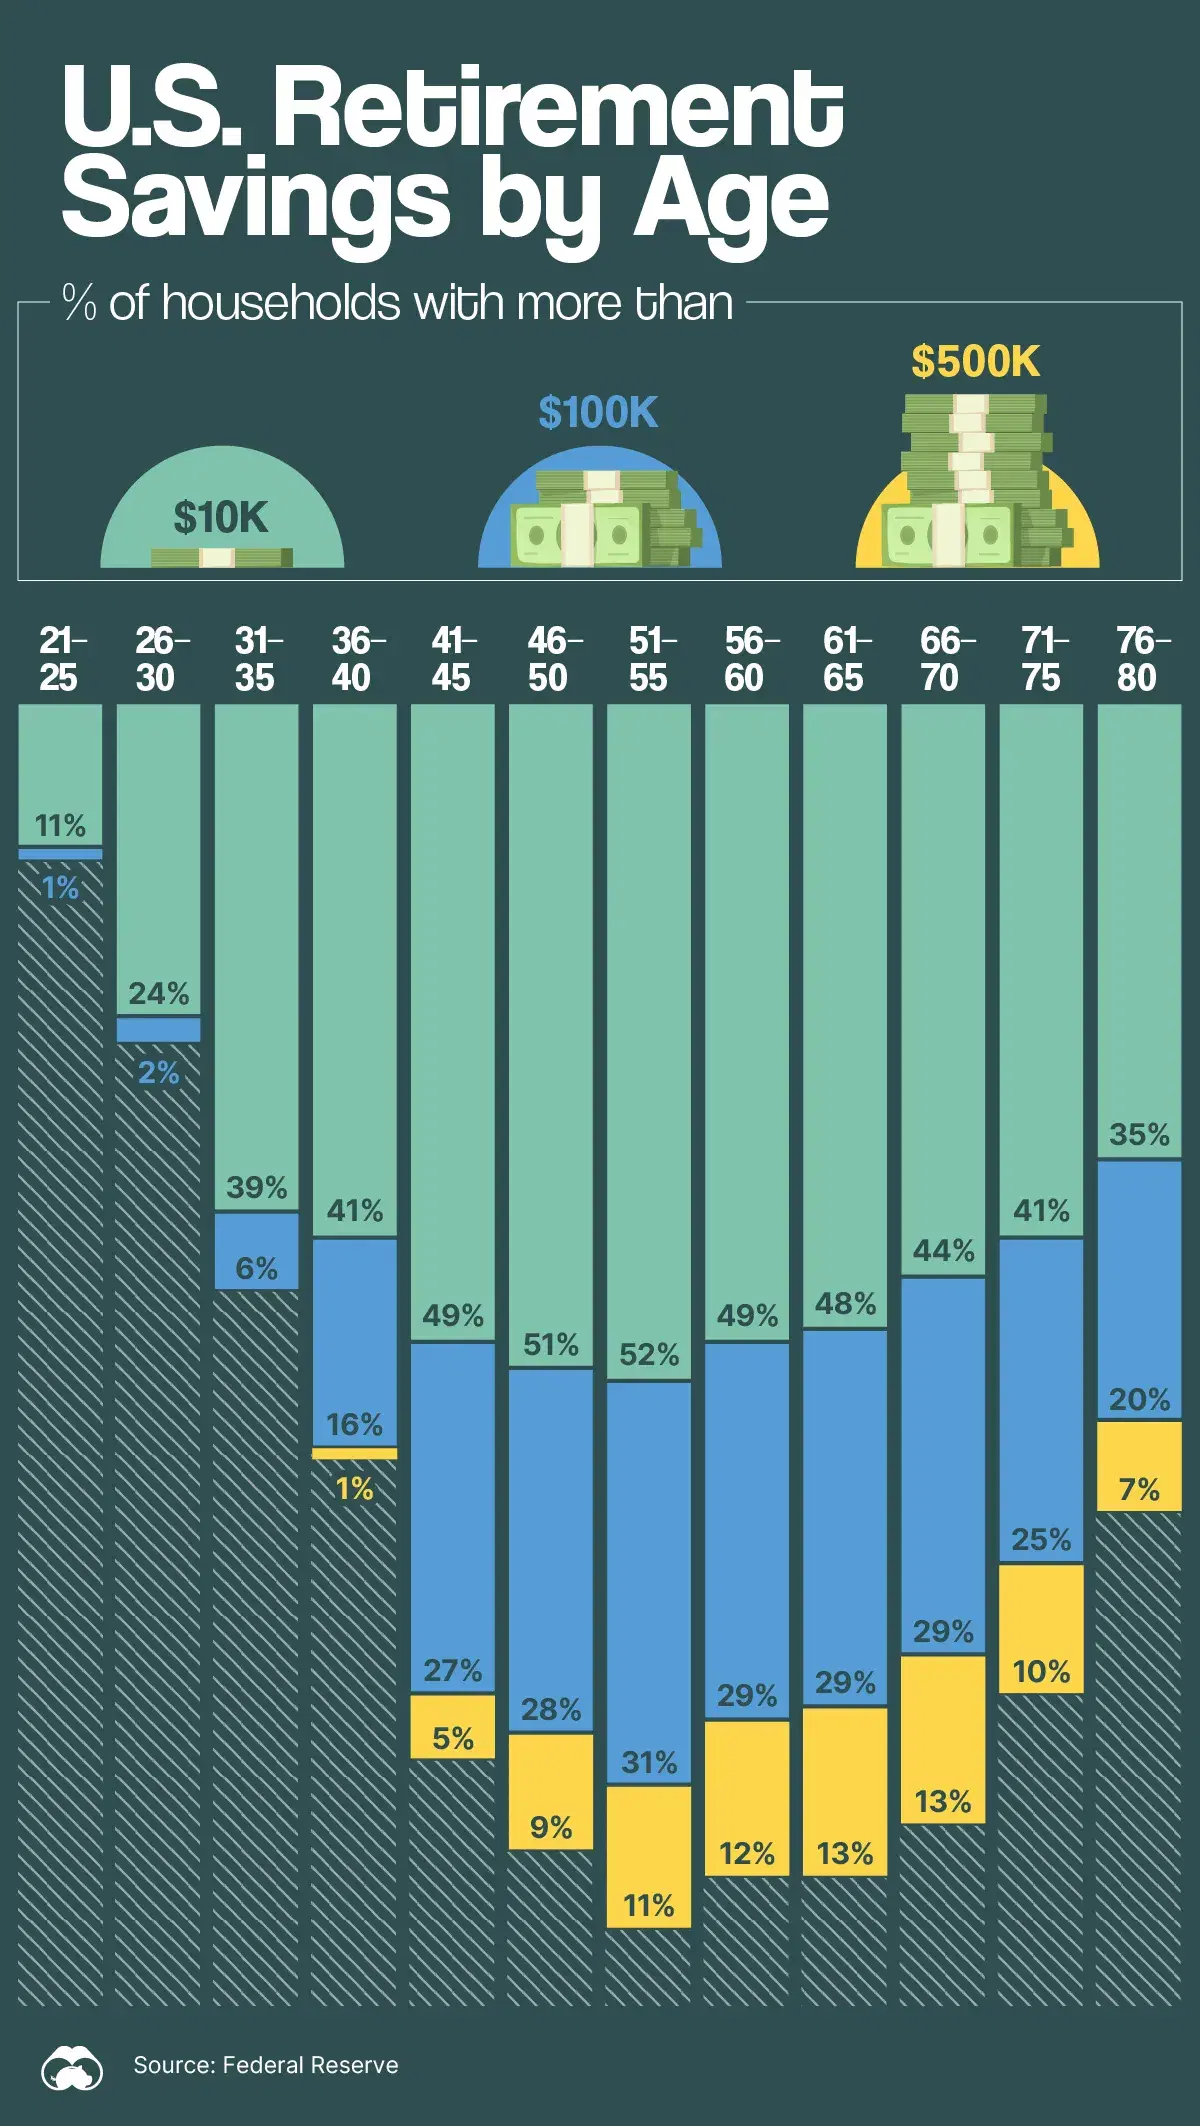 Visualizing U.S. Retirement Savings by Age